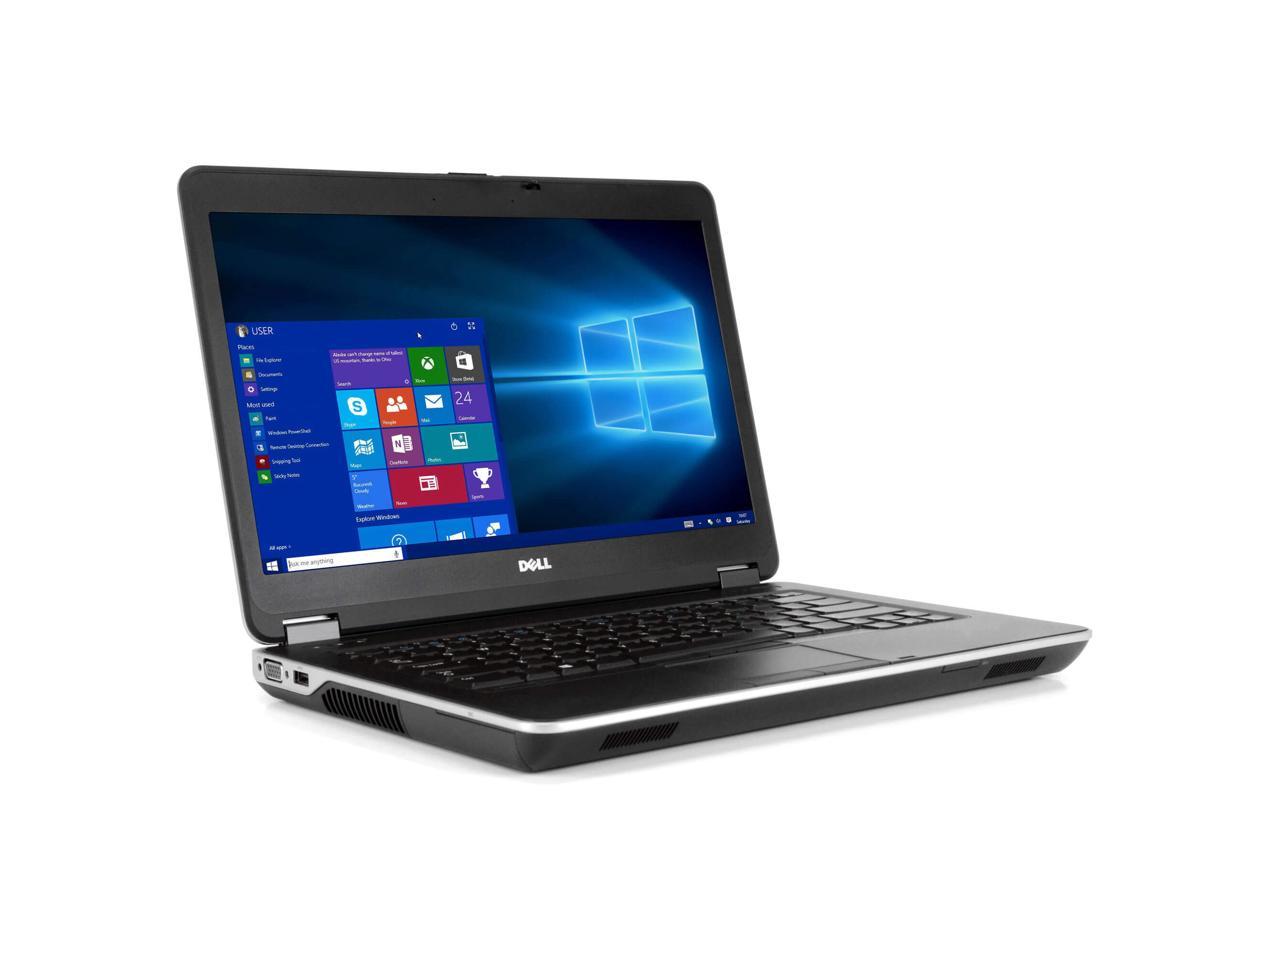 DELL LATITUDE E6440 Laptop Computer, 2.60 GHz Intel i5 Dual Core Gen 4, 8GB DDR3 RAM, 500GB Hard Disk Drive (HDD) SATA Hard Drive, Windows 10 Home 64Bit, 14" Screen